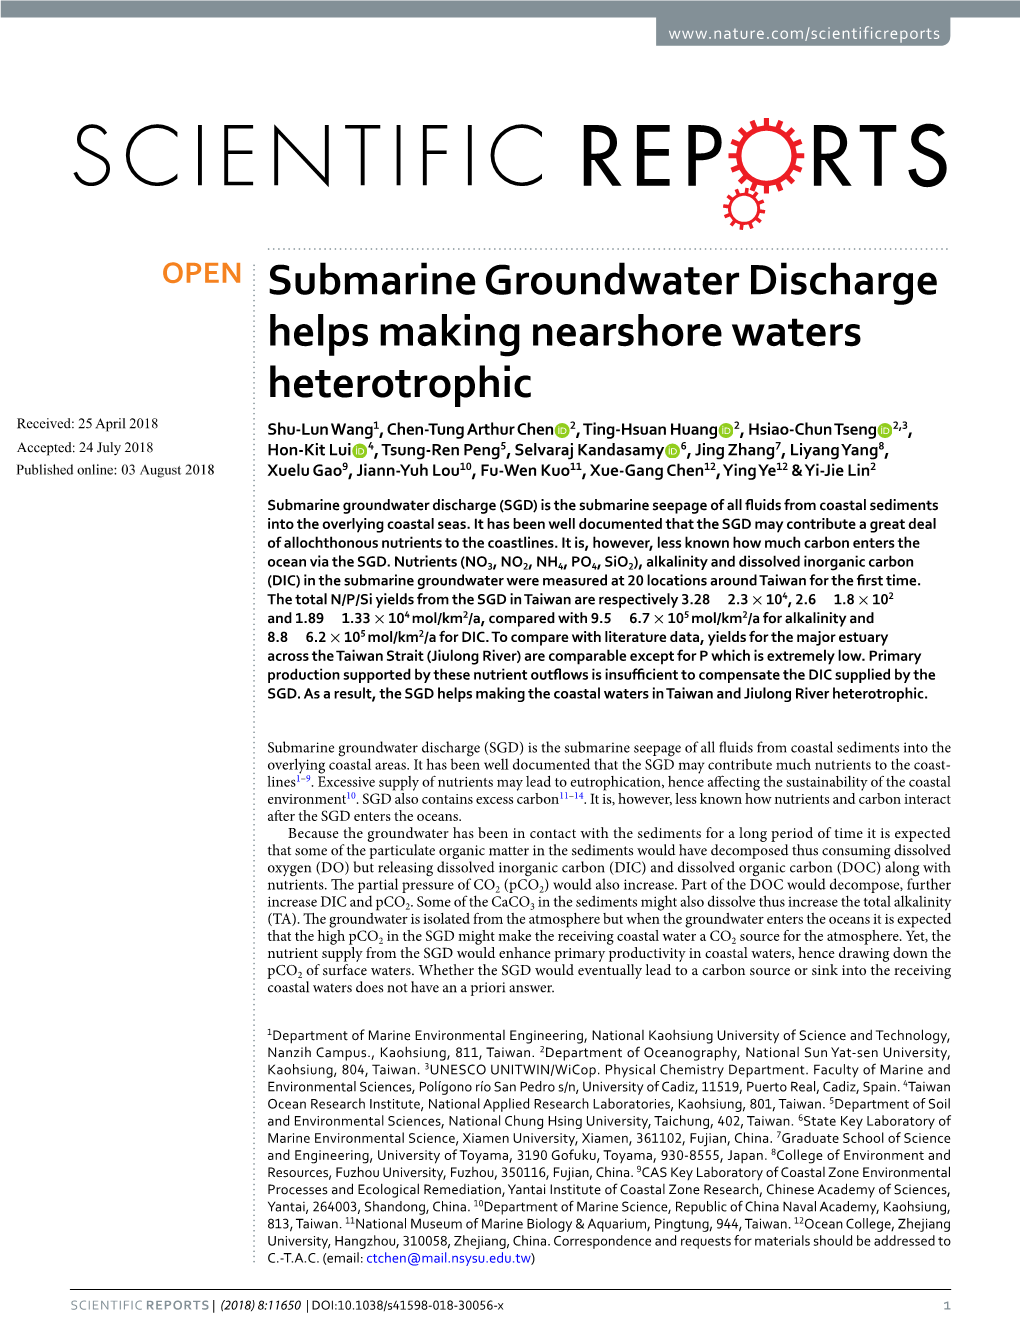 Submarine Groundwater Discharge Helps Making Nearshore Waters